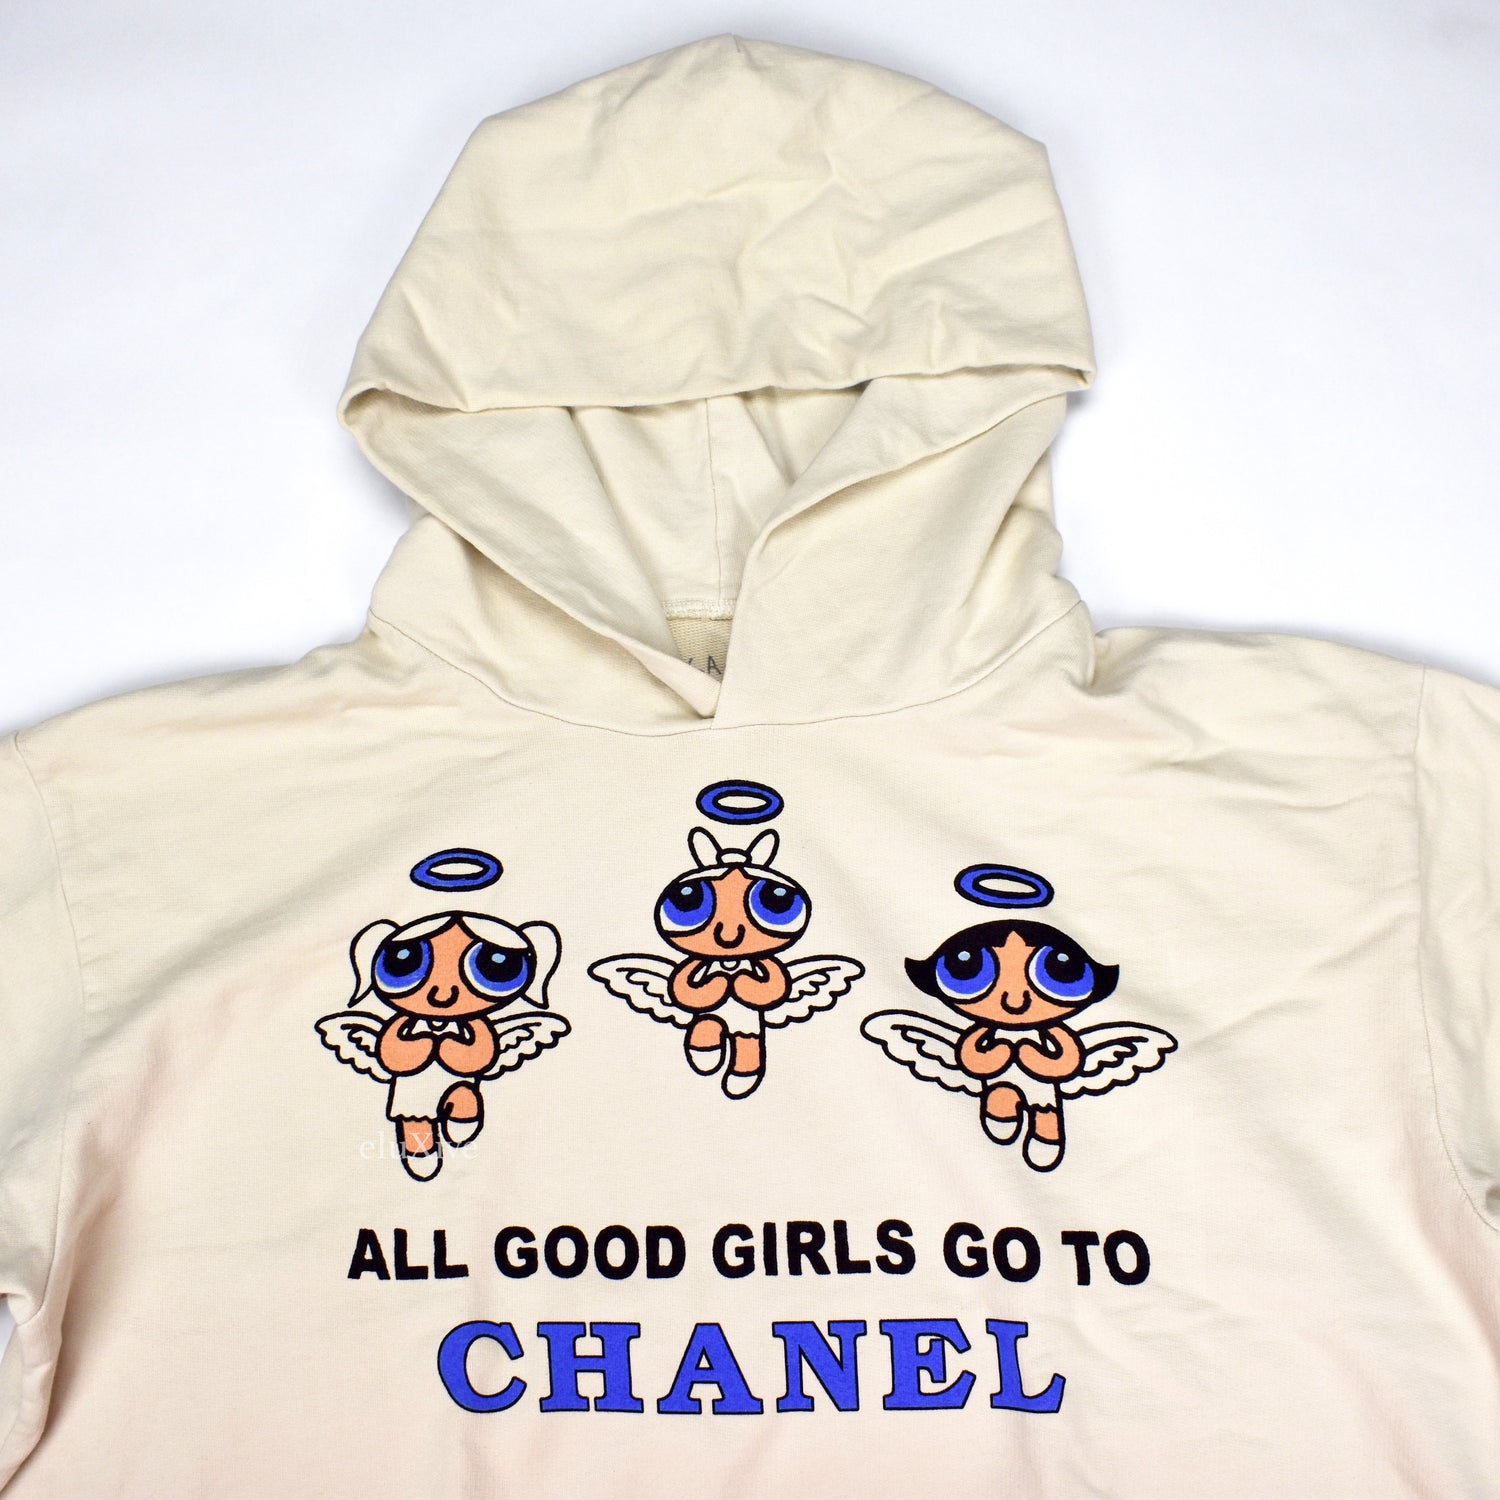 Mega Yacht All Good Girls Go To Chanel, Bad Girls Go